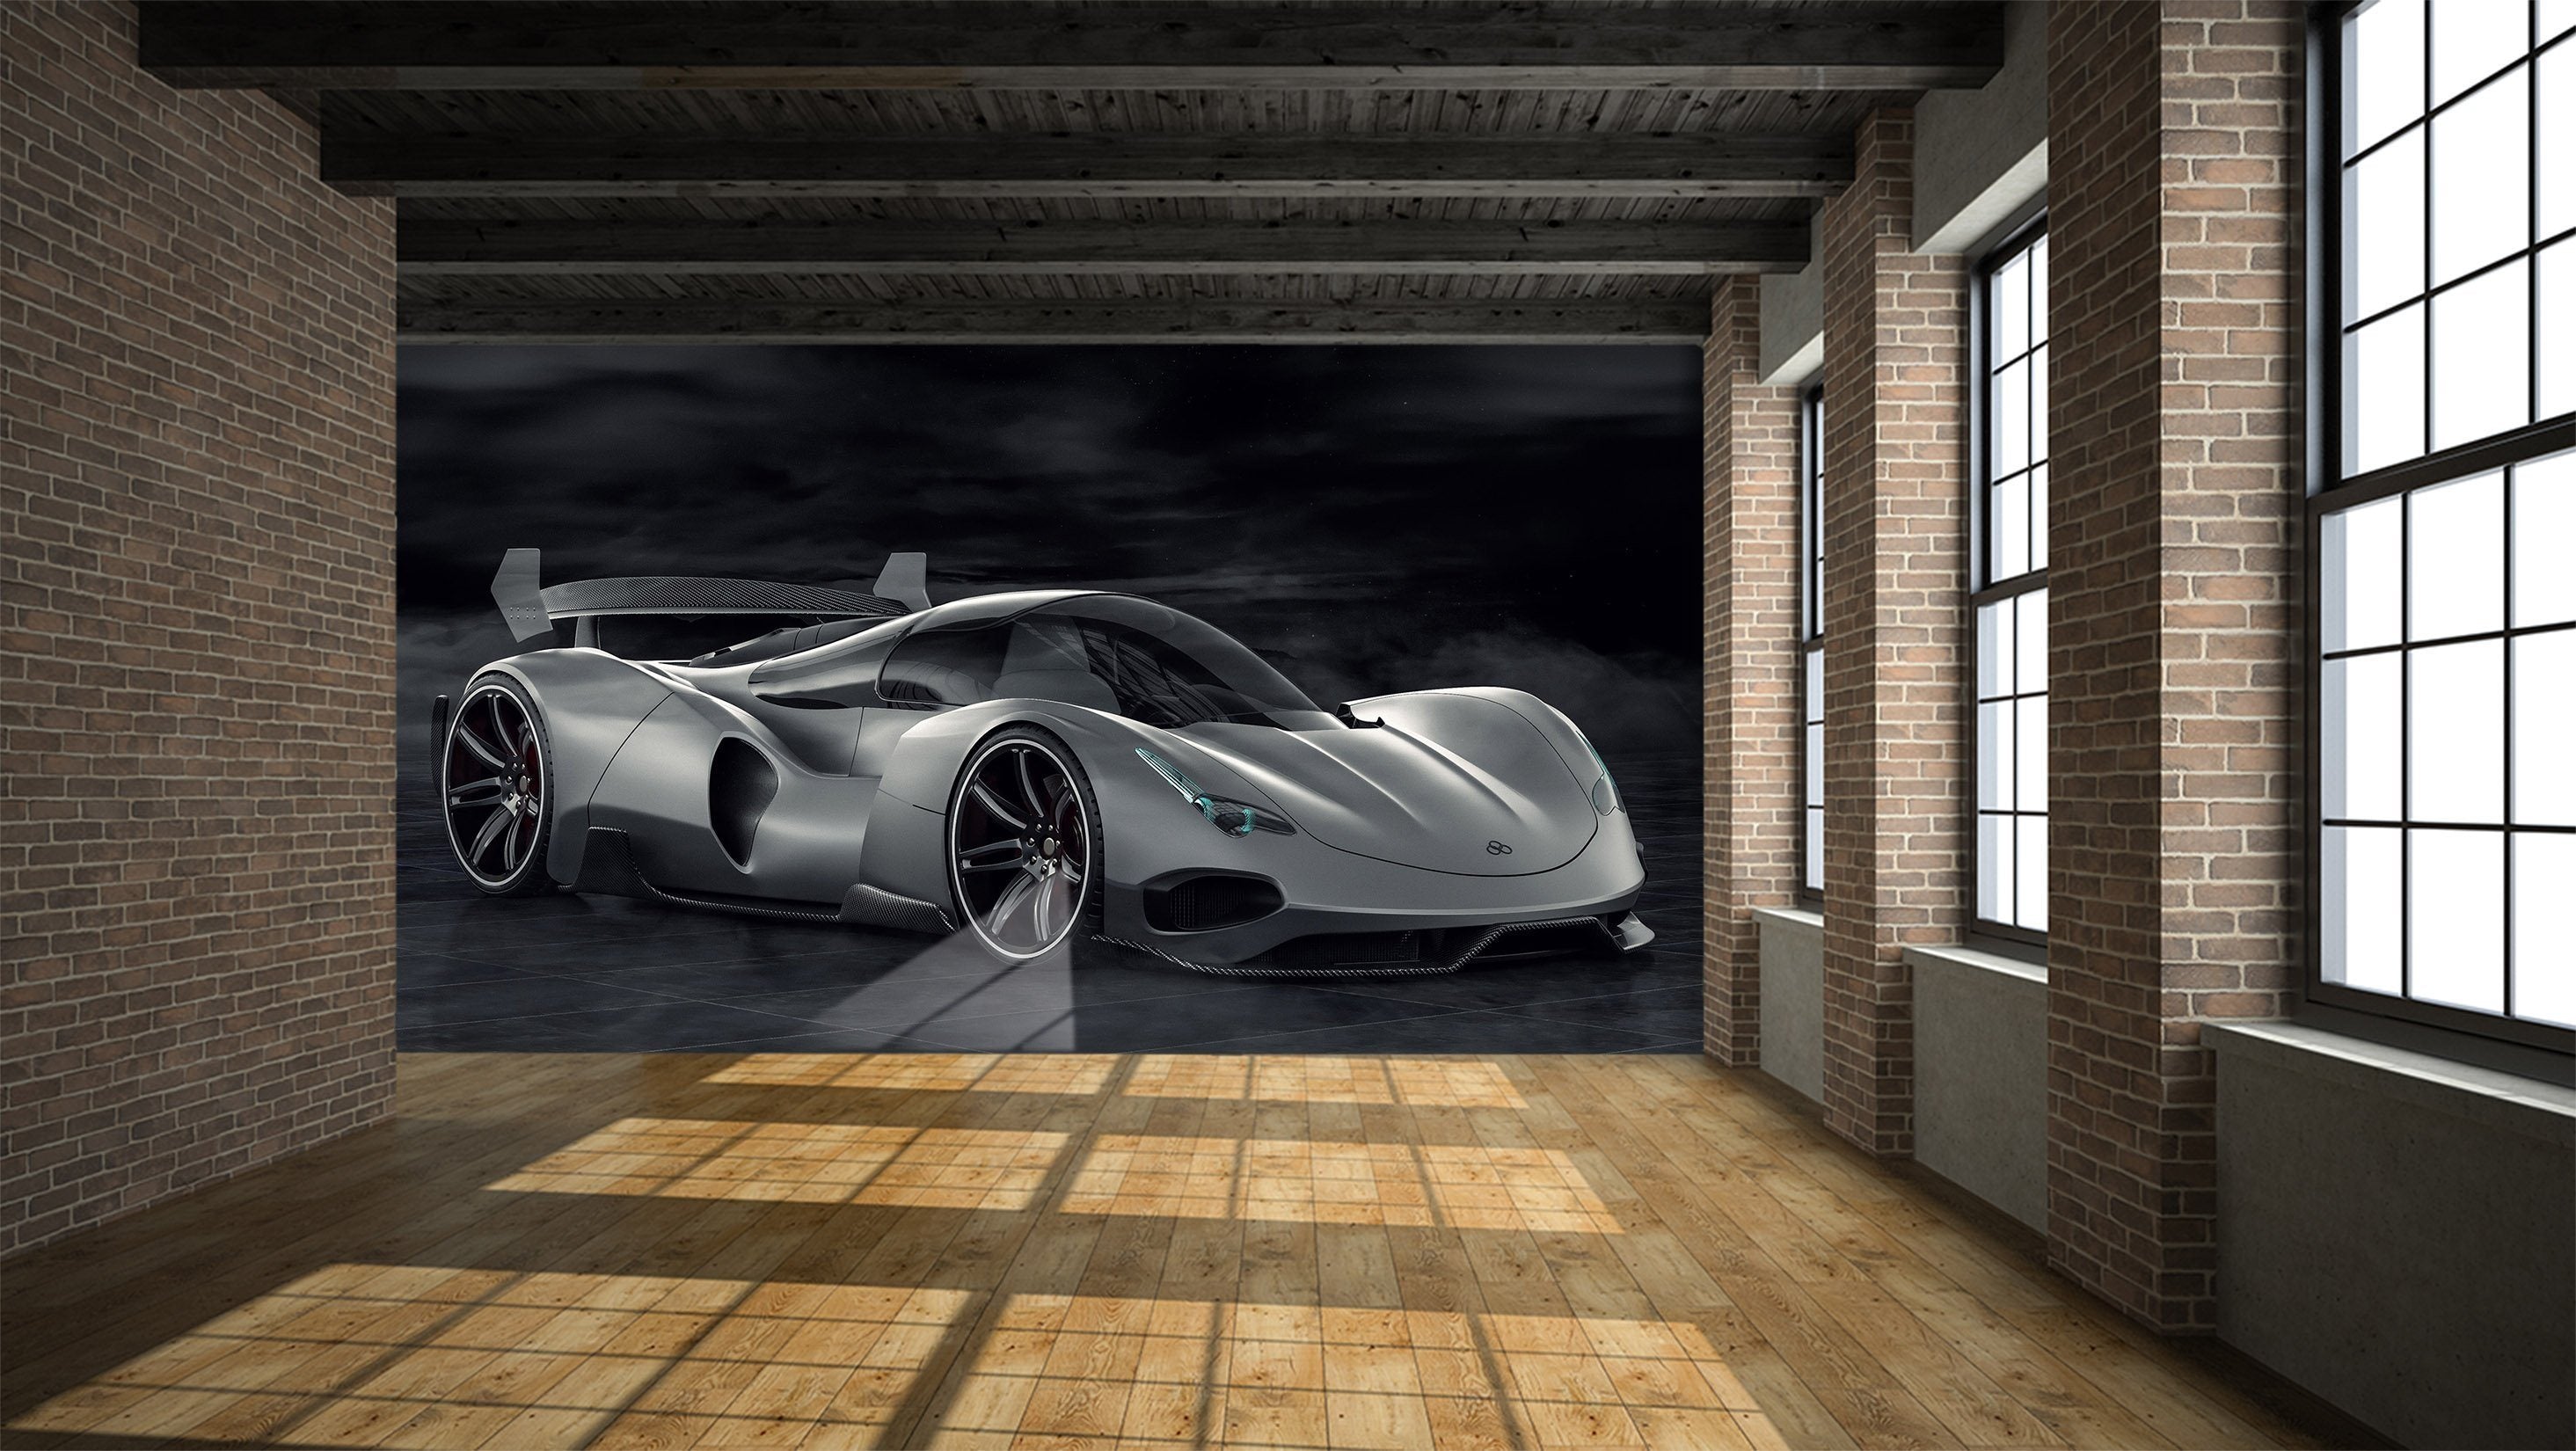 3D Black Sports Car Side 966 Vehicle Wall Murals Wallpaper AJ Wallpaper 2 